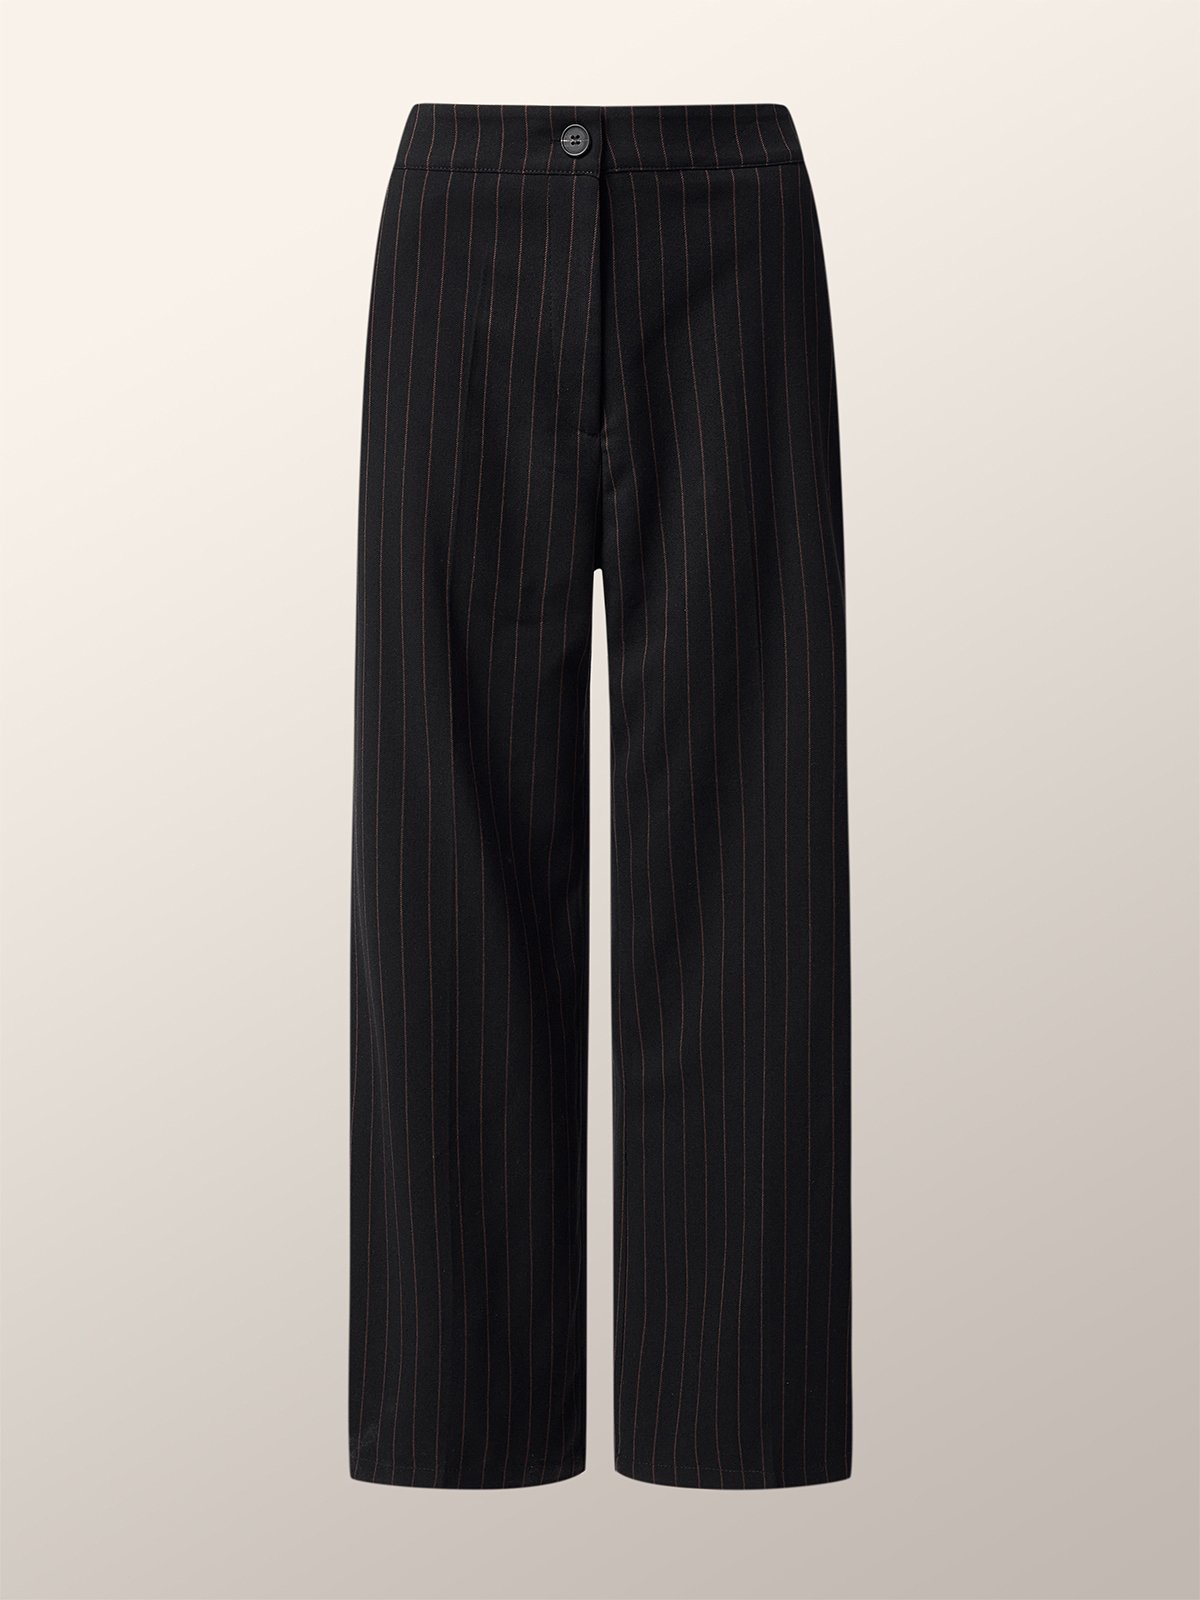 Striped Urban Regular Fit Fashion Pants